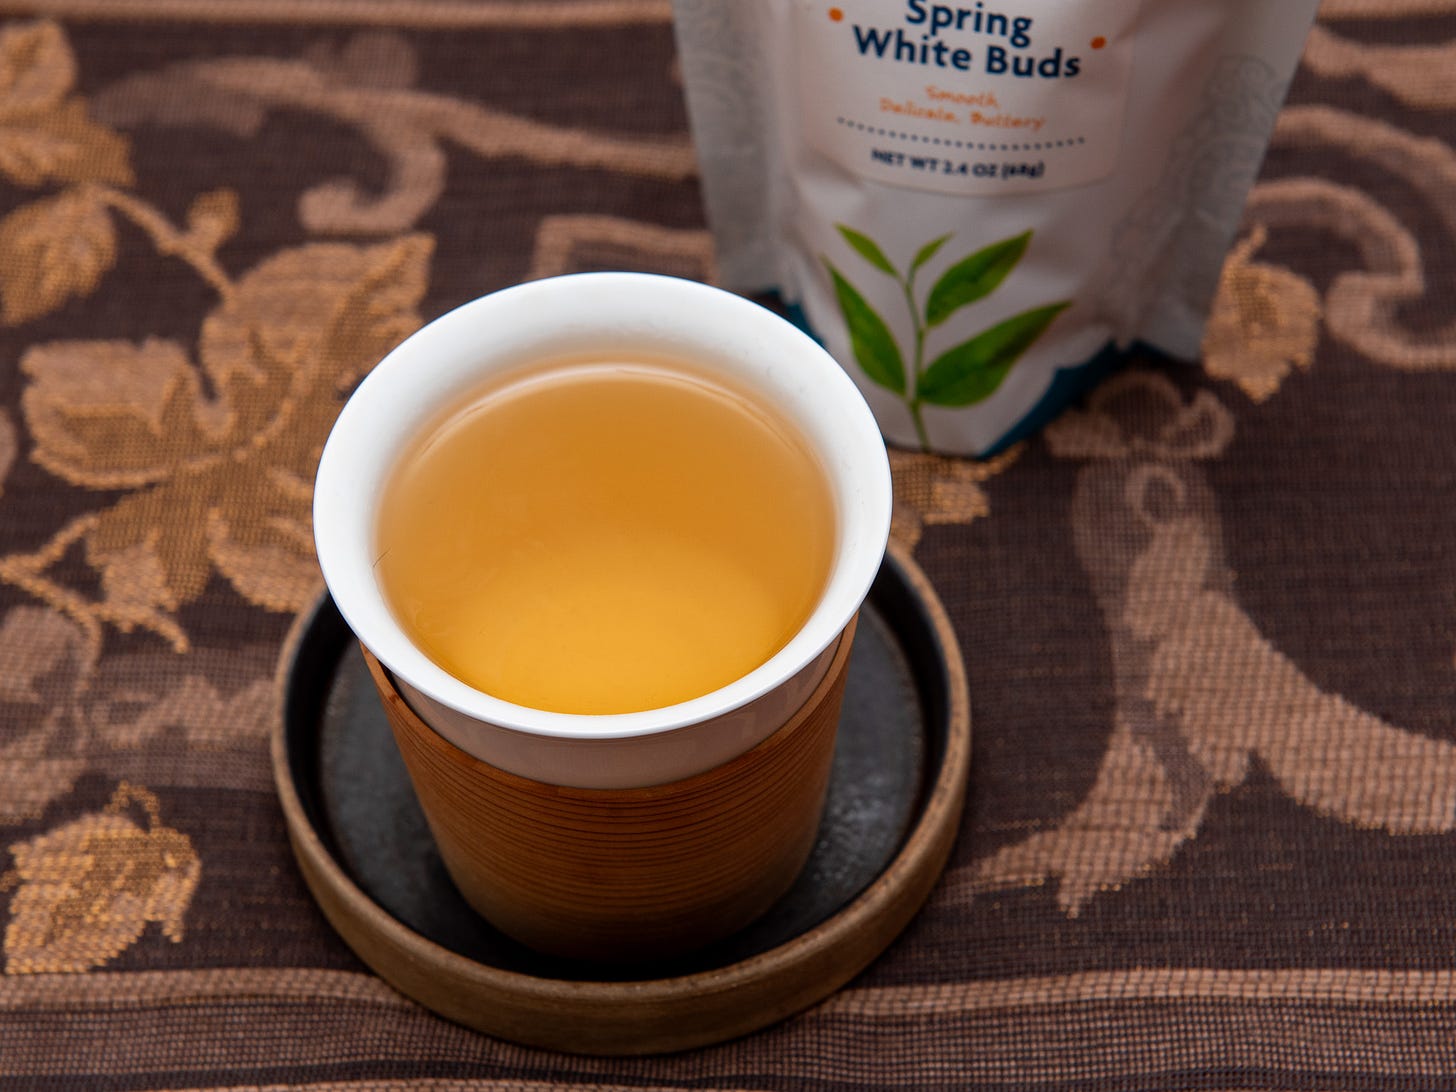 ID: Brewed spring white buds white tea